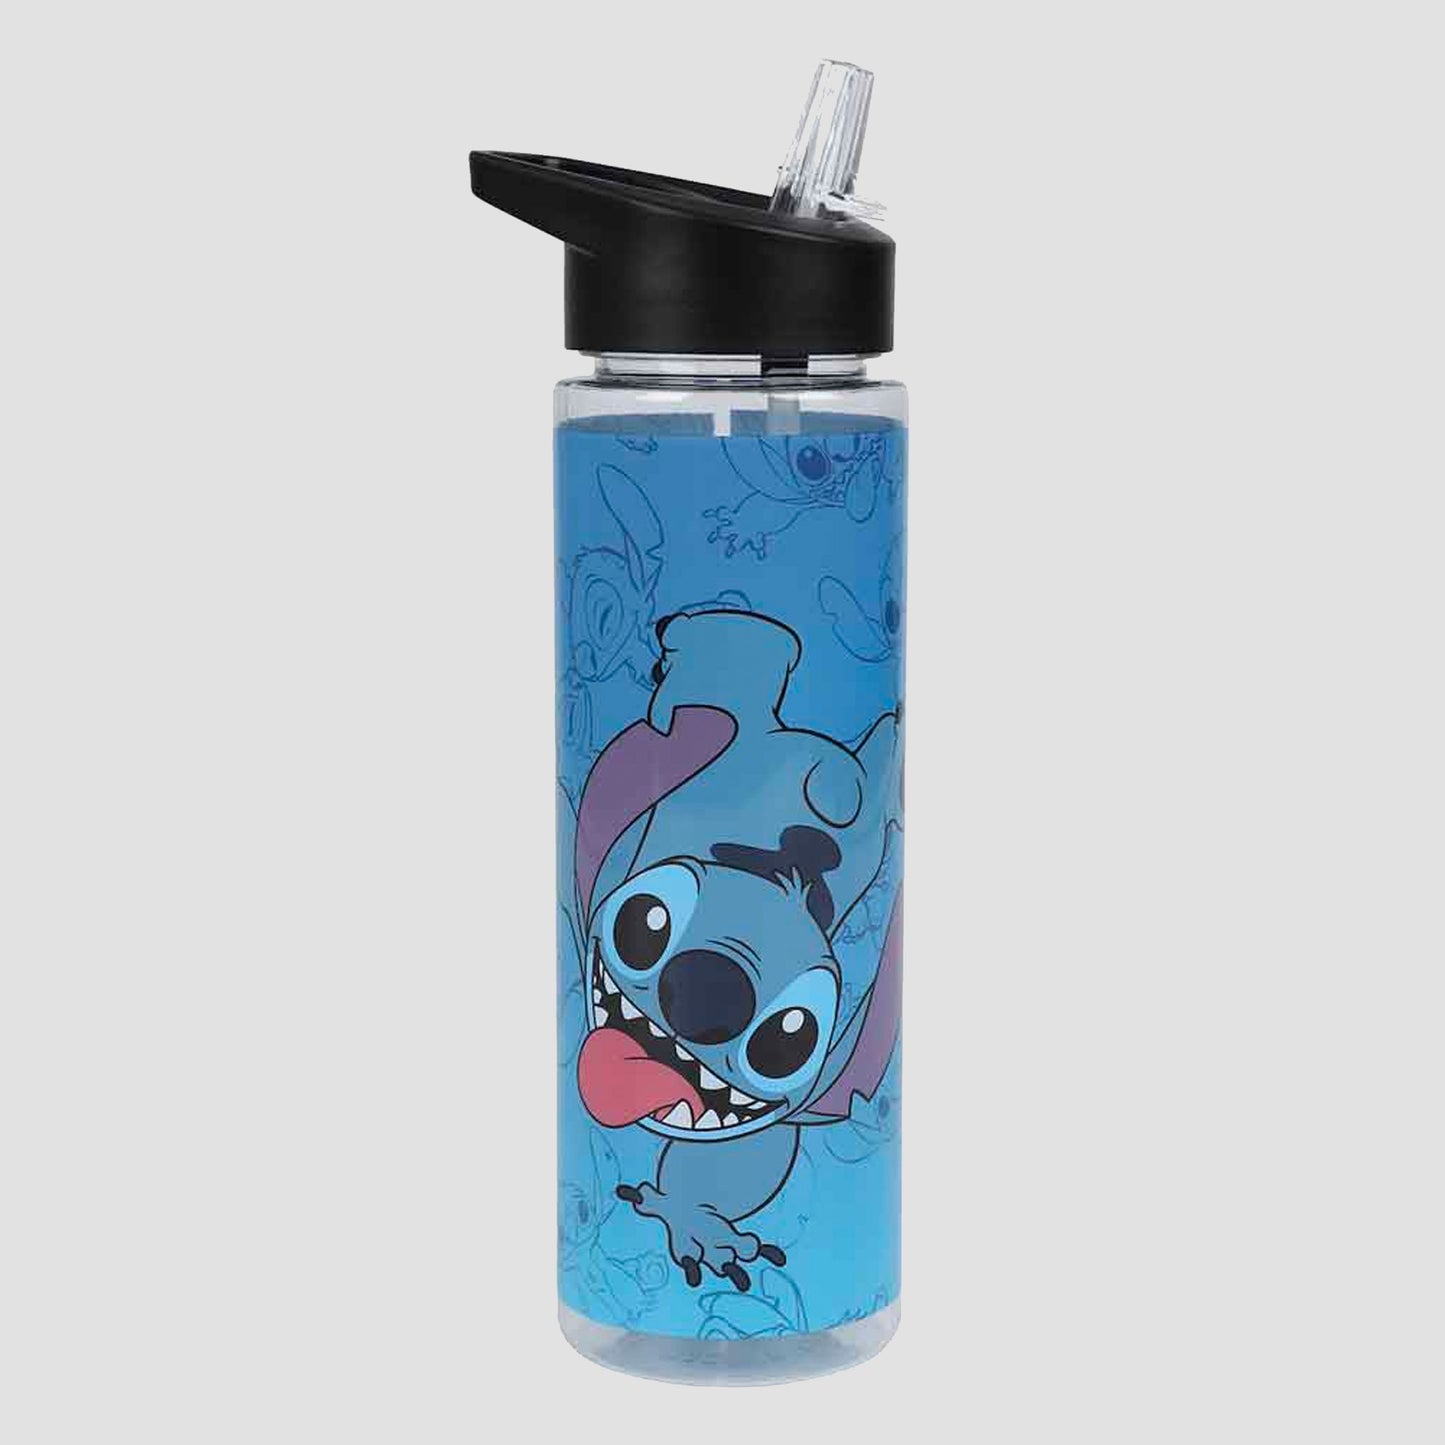 Lilo & Stitch (Disney) 24oz. Single Wall Water Bottle Set